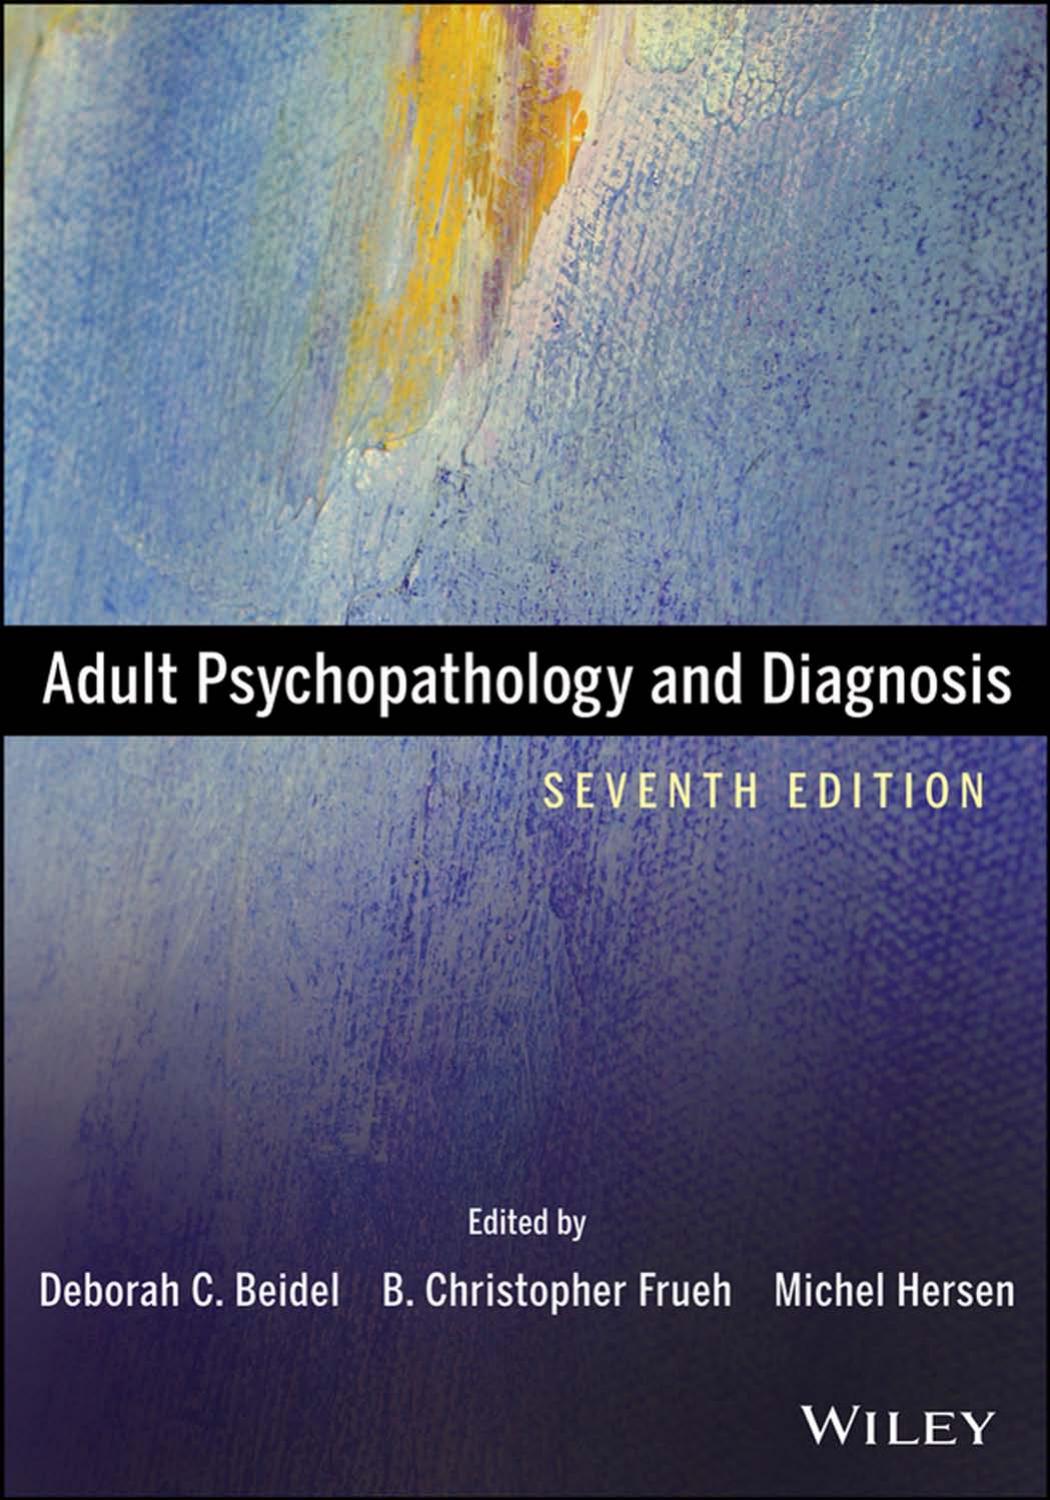 Adult Psychopathology and Diagnosis, 7th Edition - Deborah C. Beidel.jpg